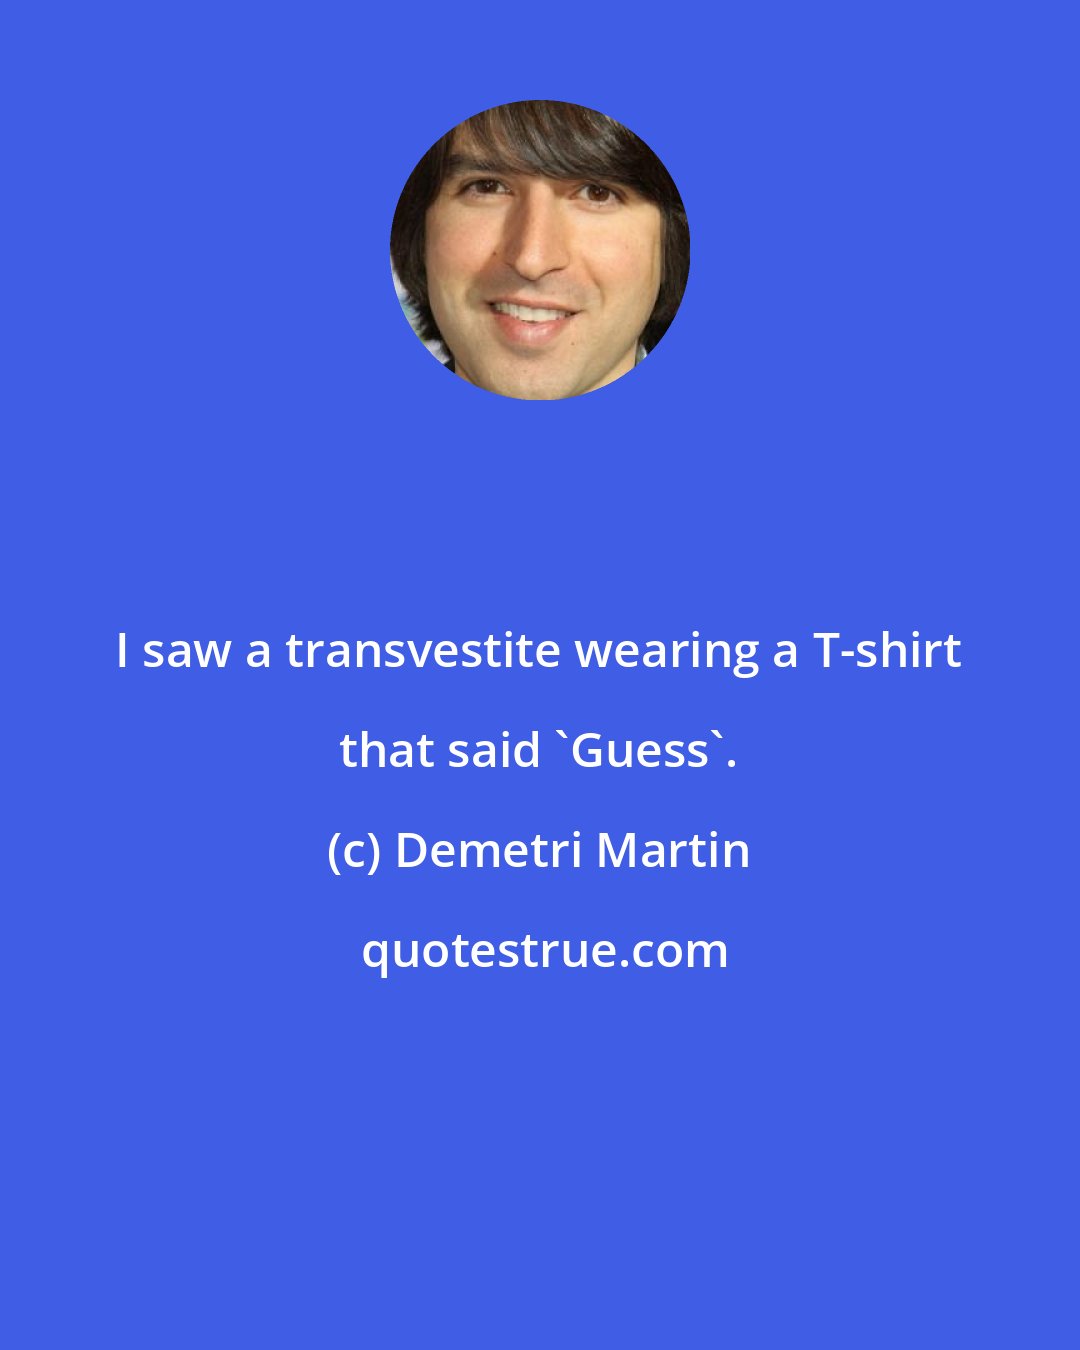 Demetri Martin: I saw a transvestite wearing a T-shirt that said 'Guess'.